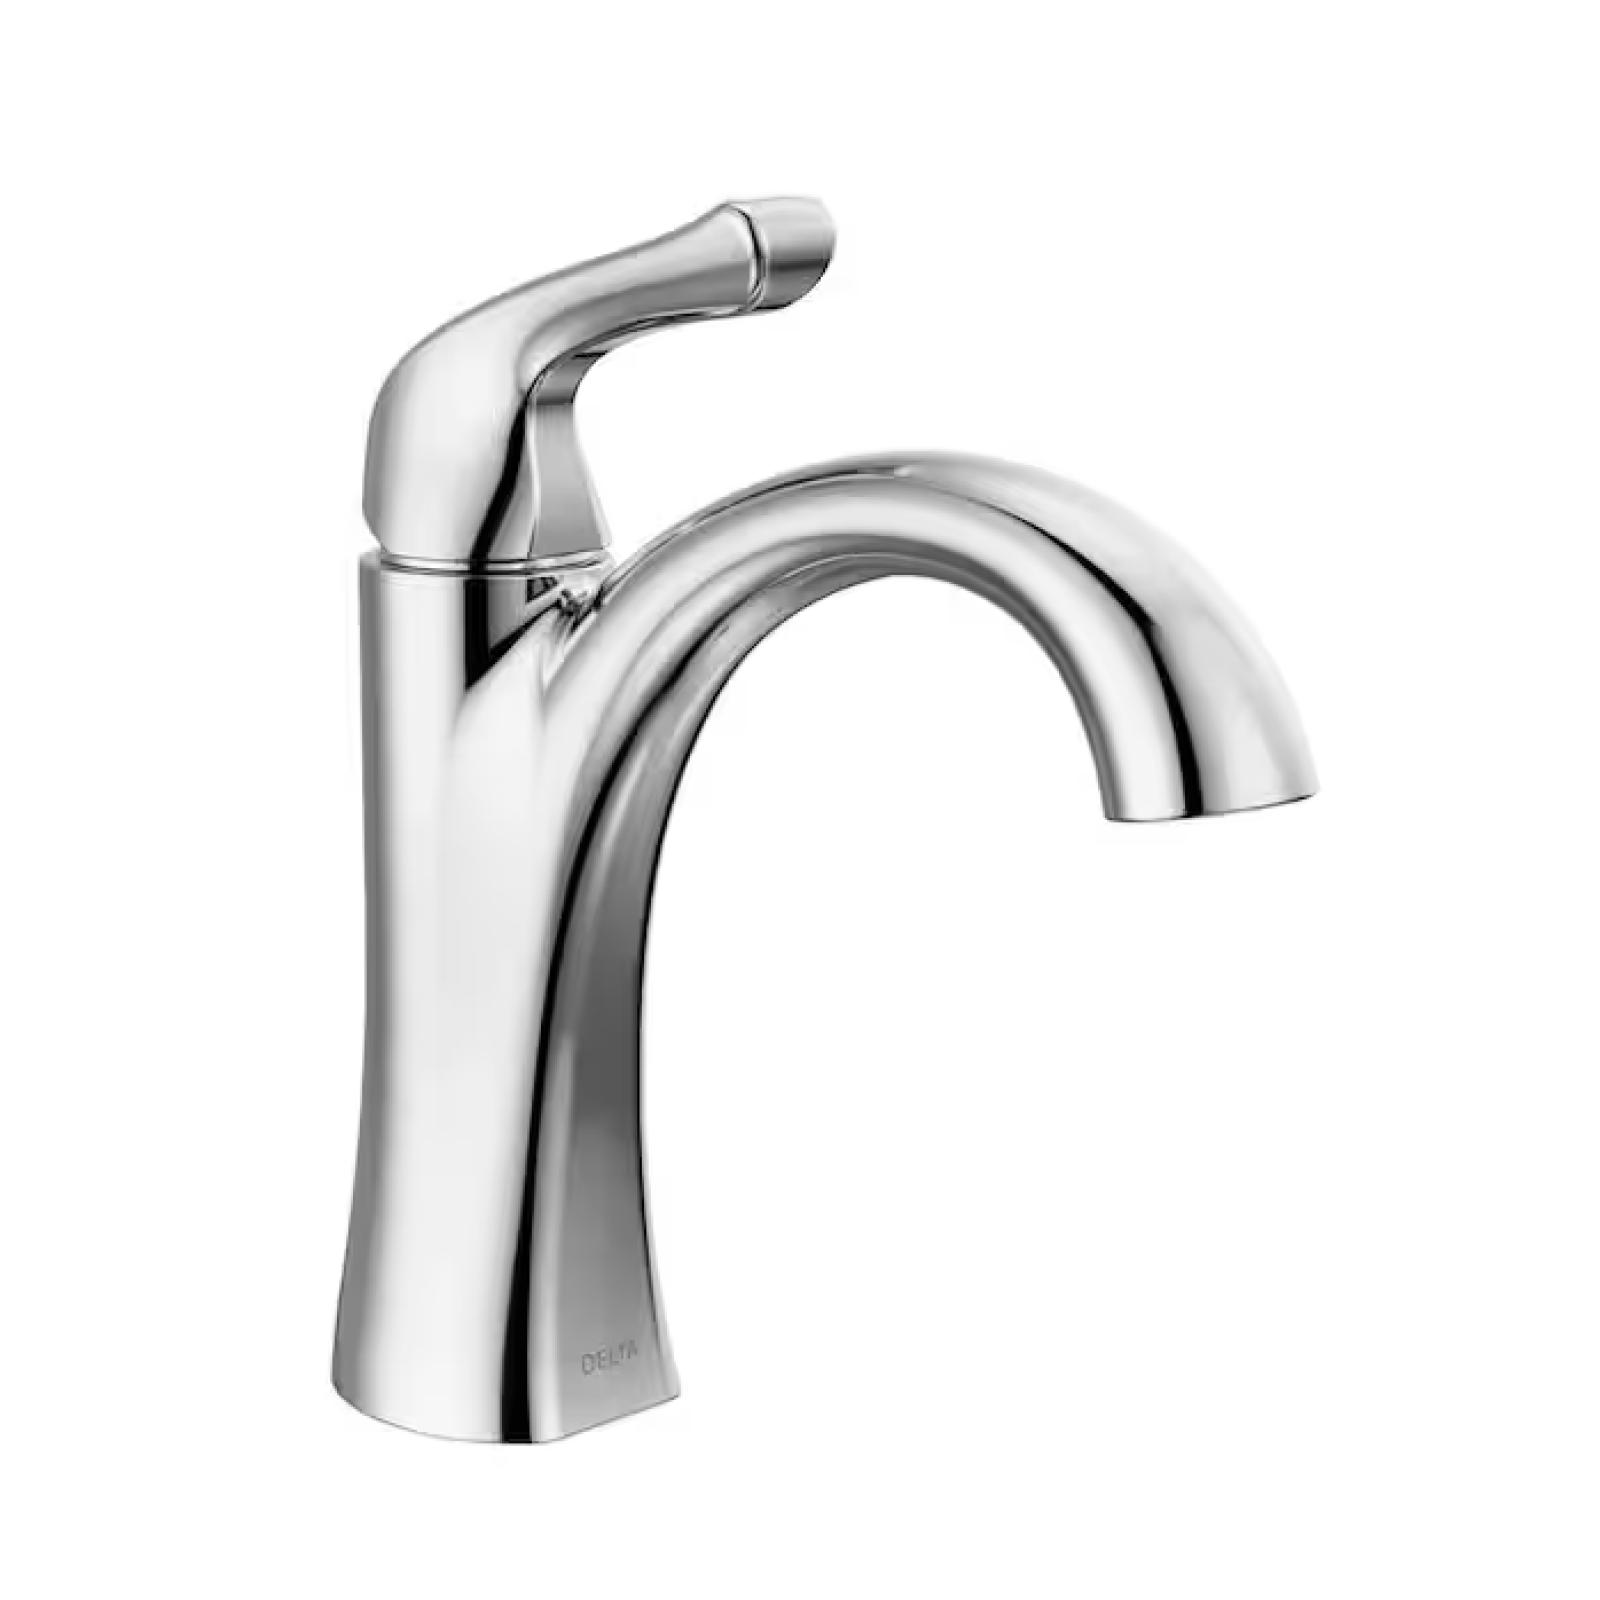 NEW! -  Delta Arvo Single Hole Single-Handle Bathroom Faucet in Chrome - (3 UNITS)